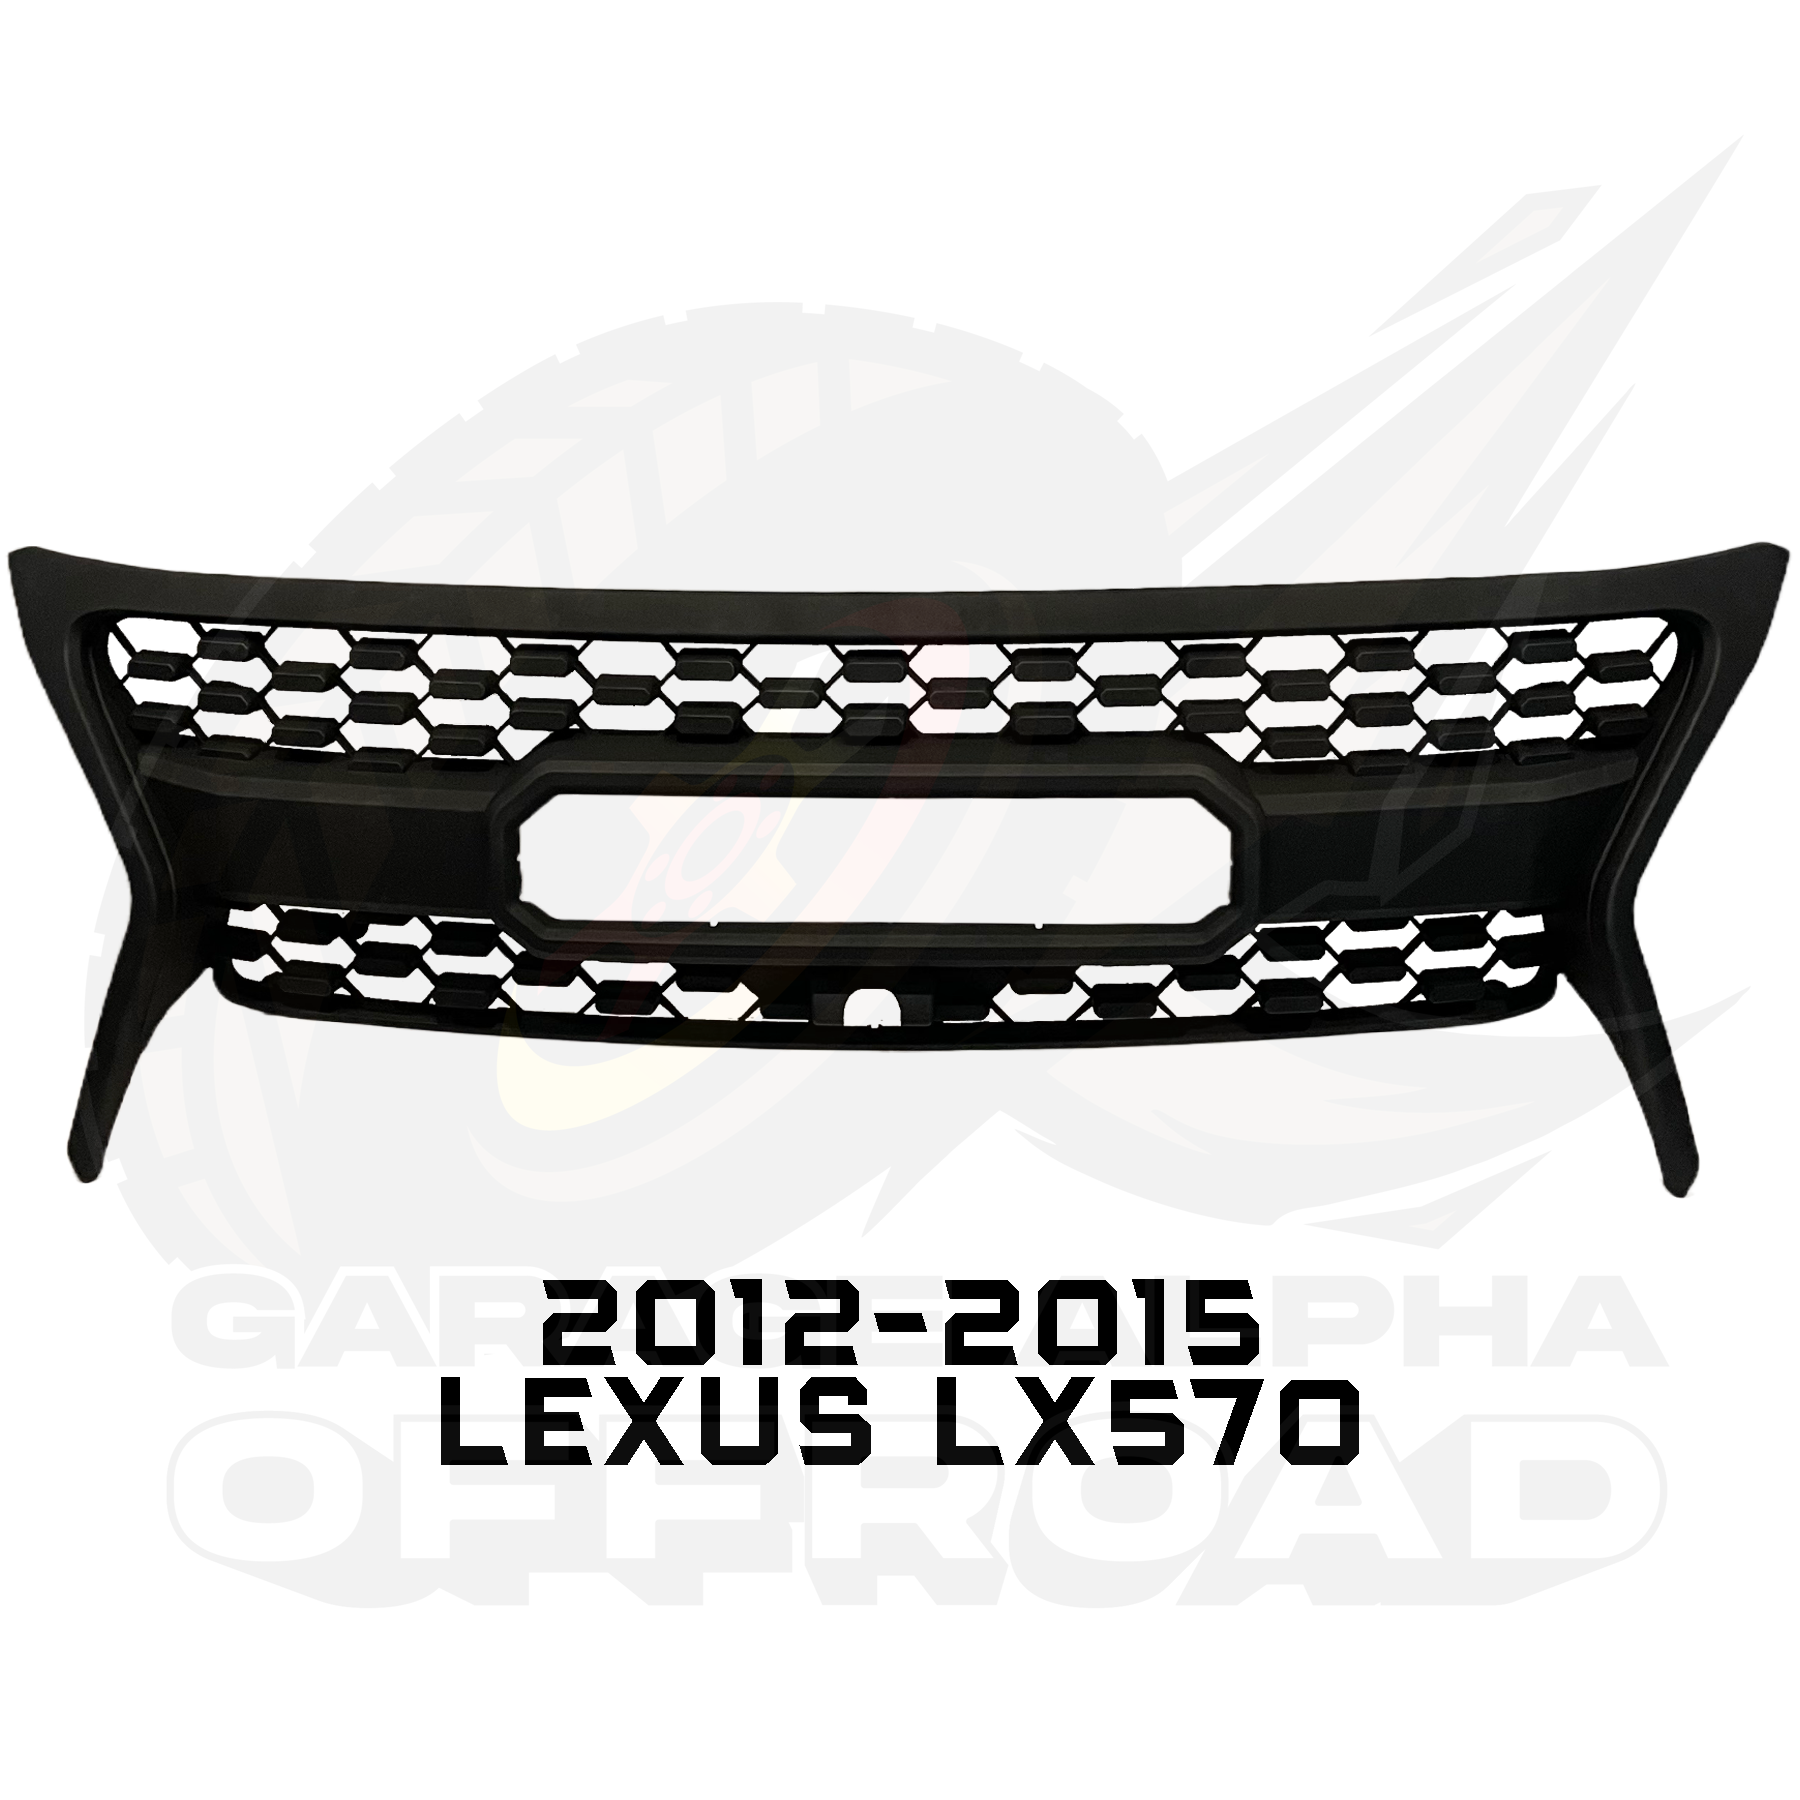 2012-2015 Lexus LX570 TRD Style Grille